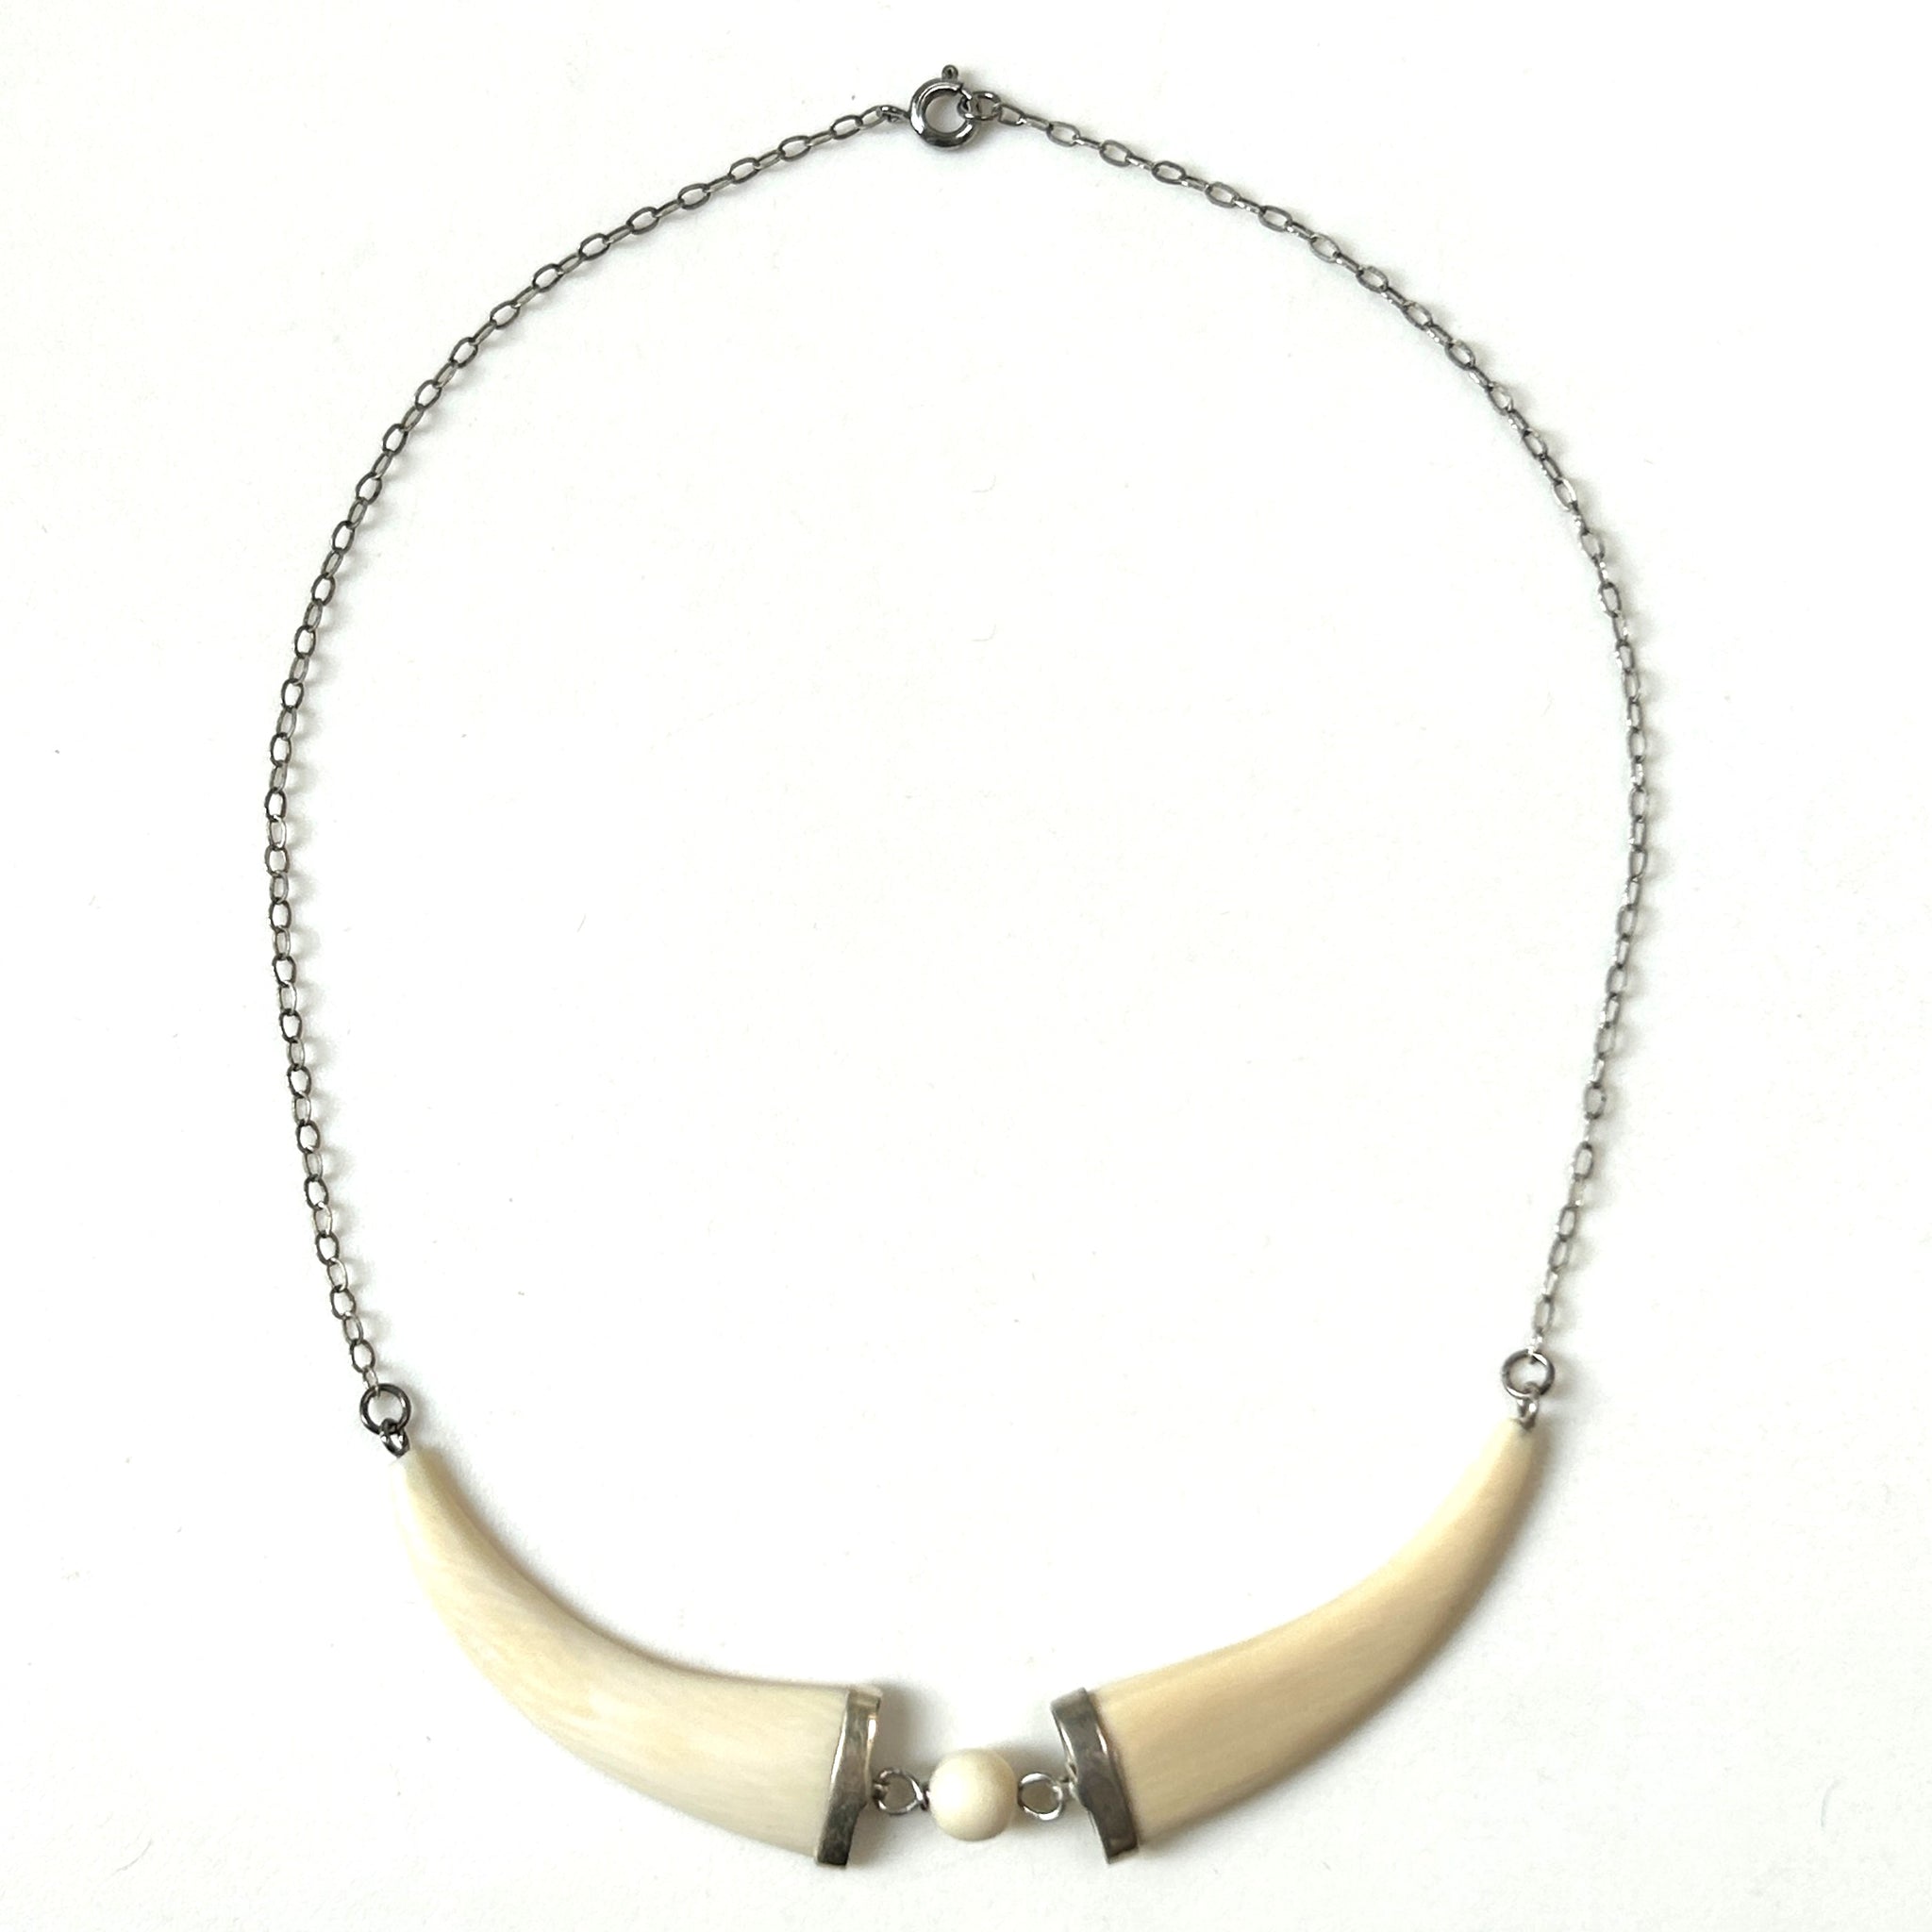 Vintage Silver Necklace with Decorative Element